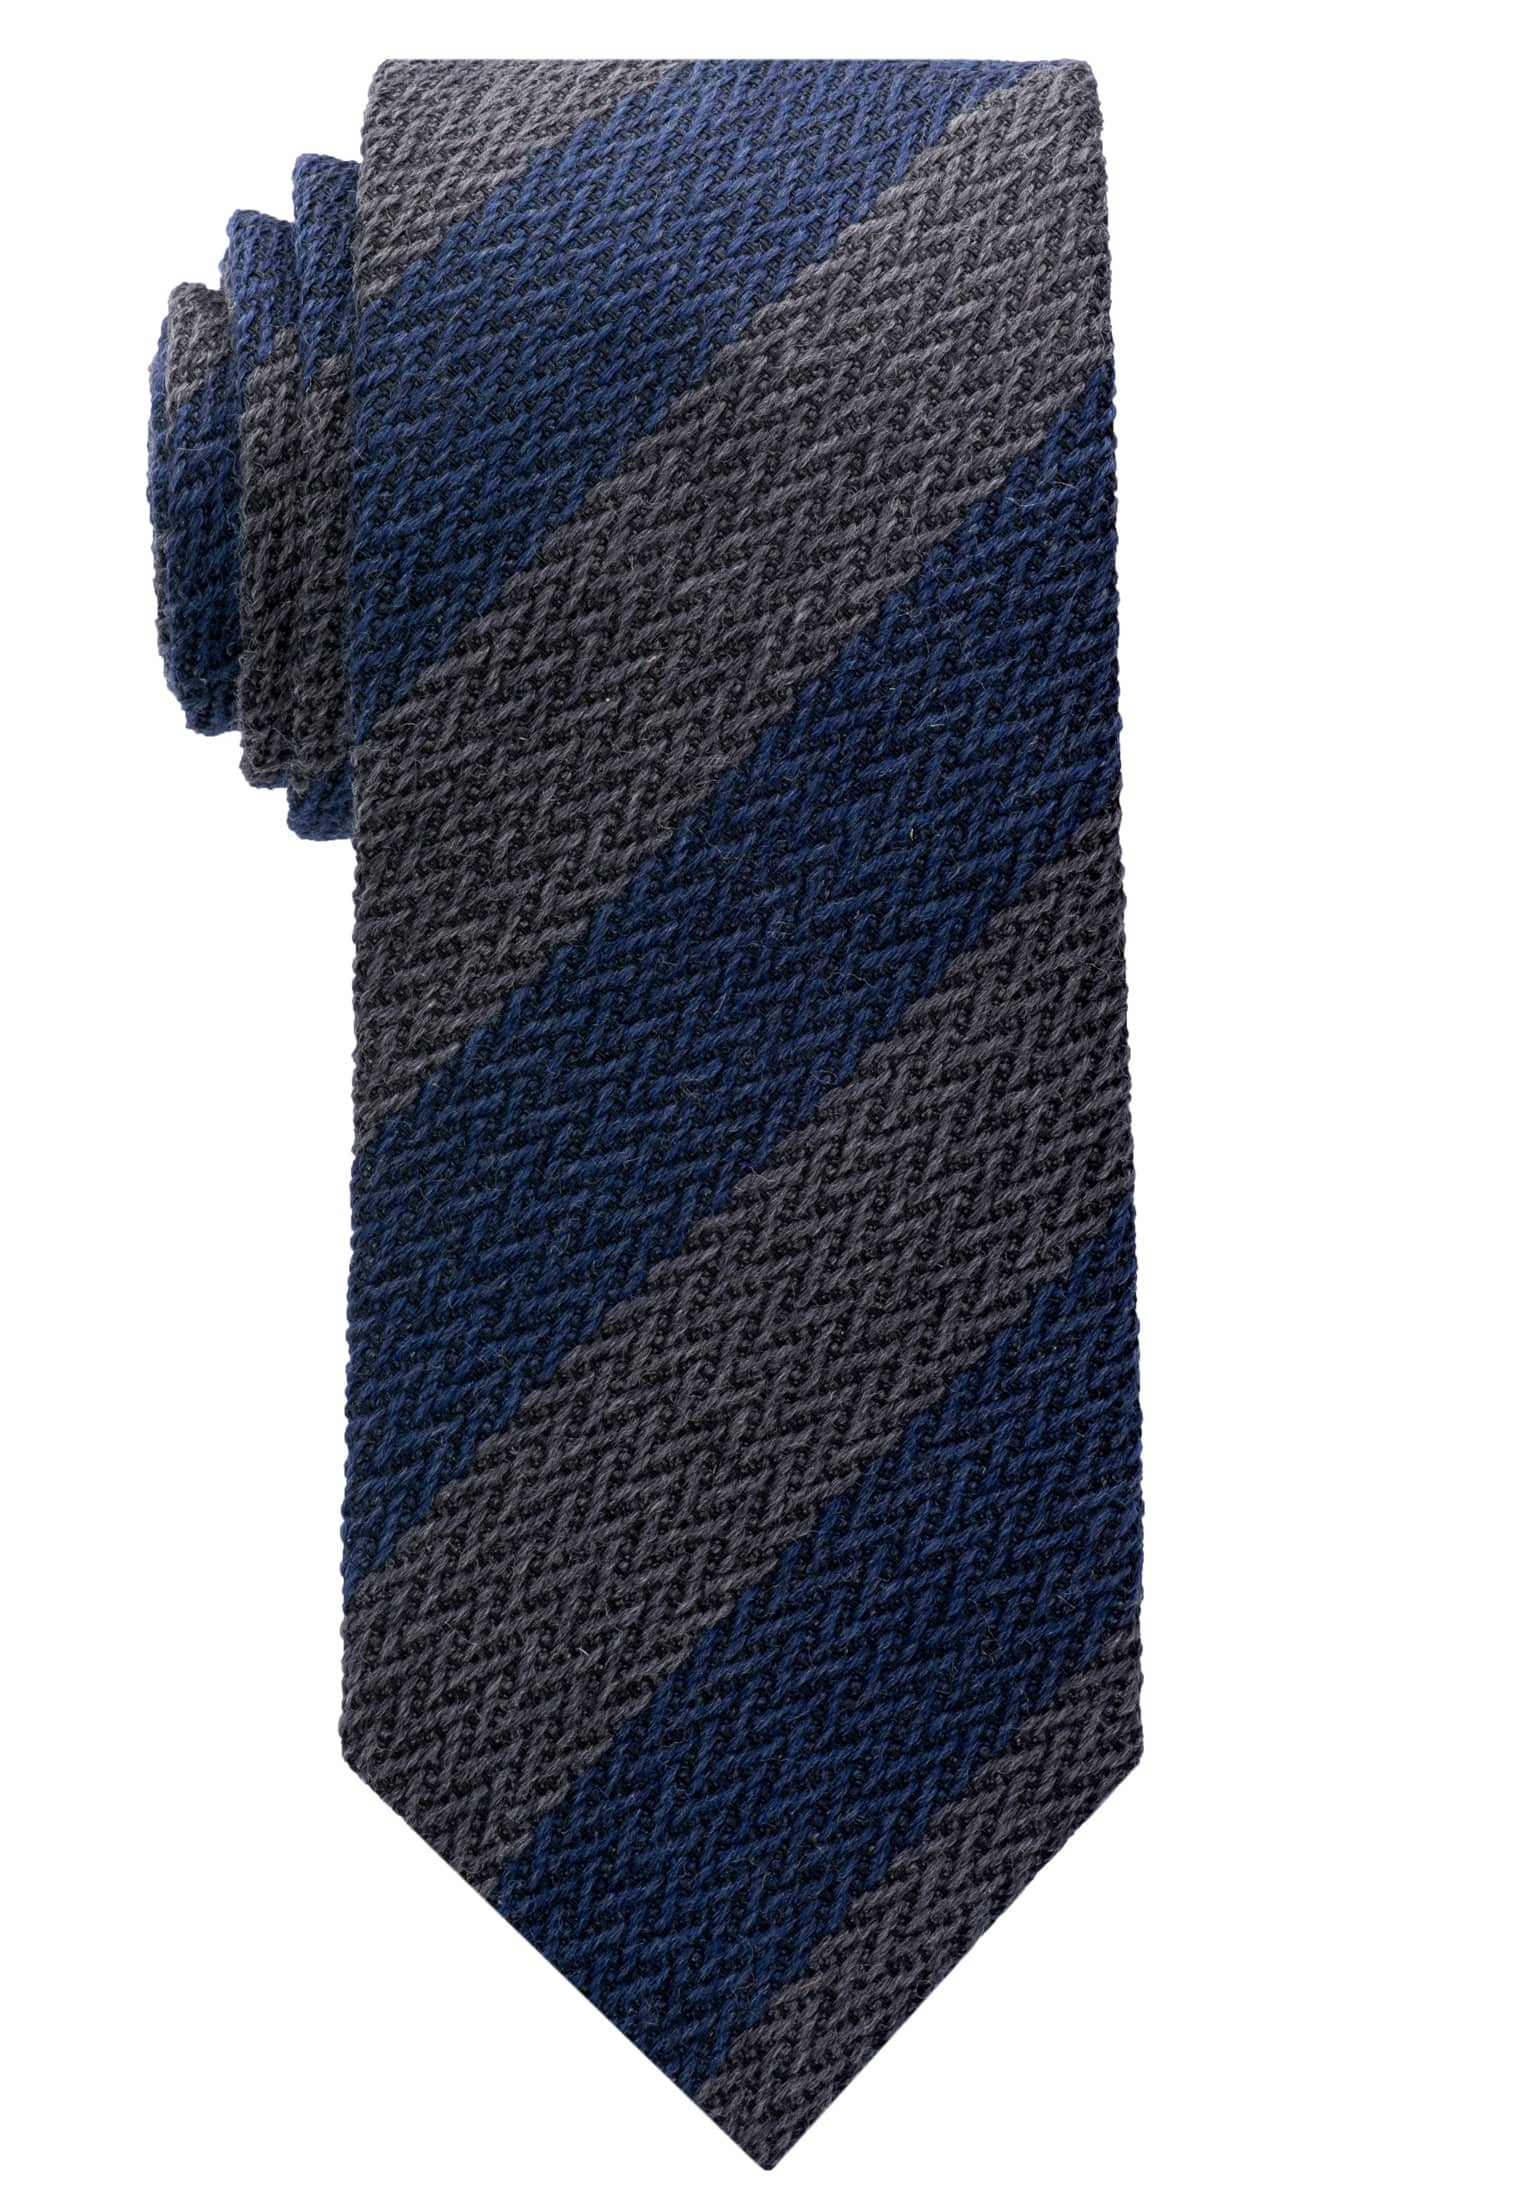 Krawatte | blau 142 | in 1AC00482-01-41-142 blau | strukturiert